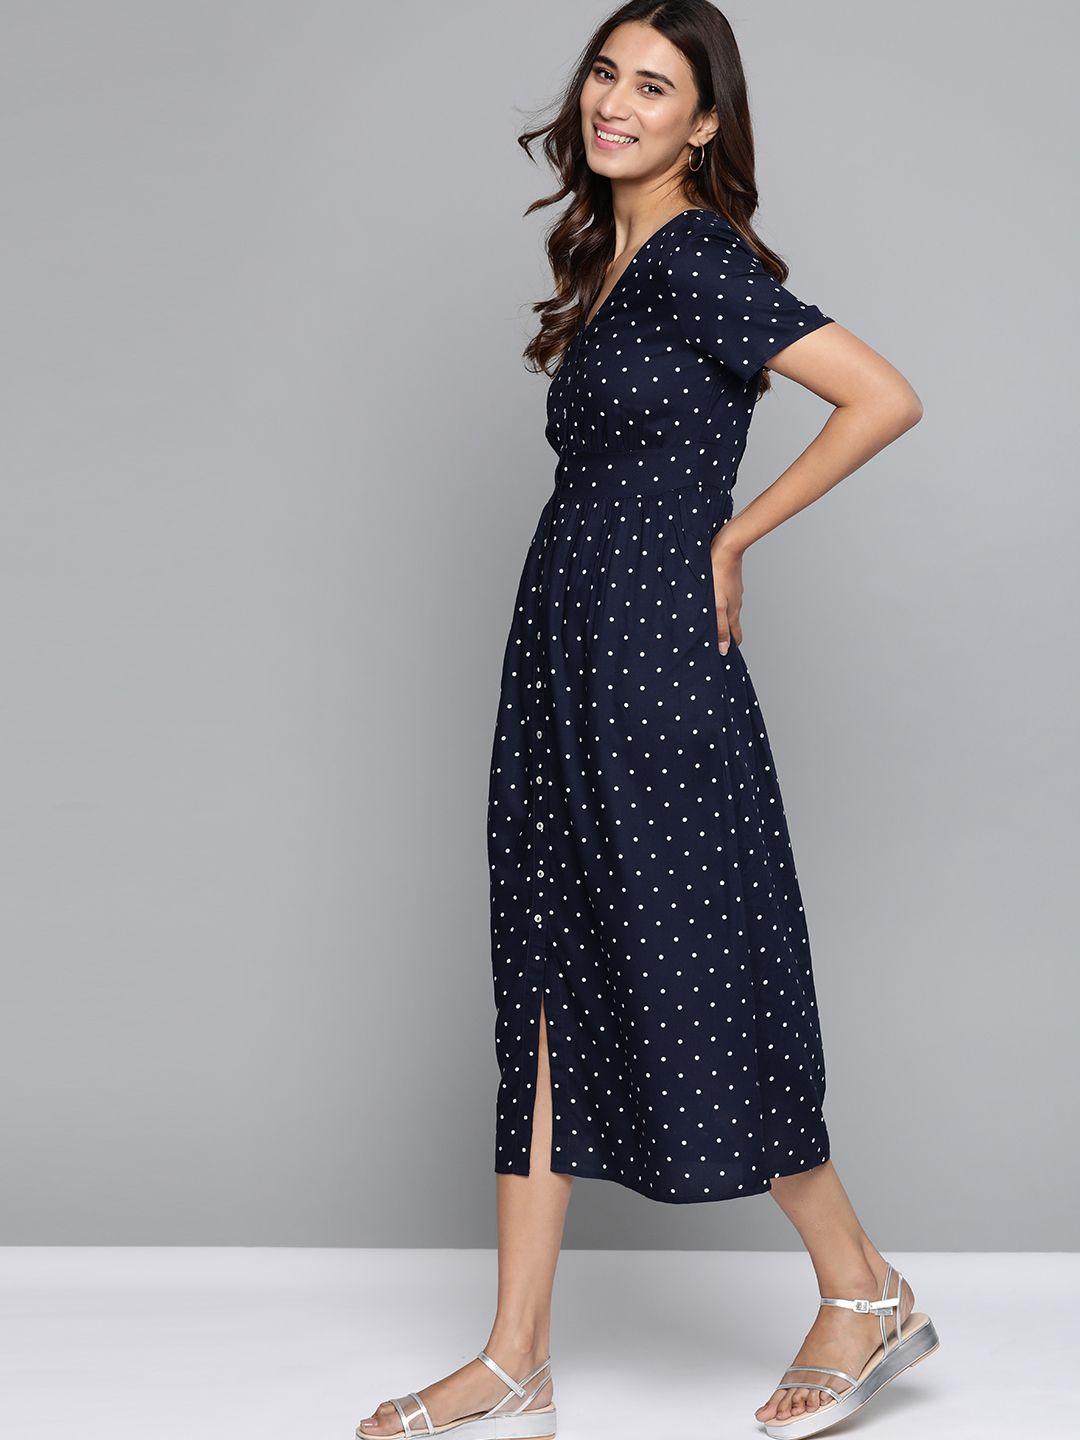 mast & harbour women navy blue & white polka dots print a-line dress